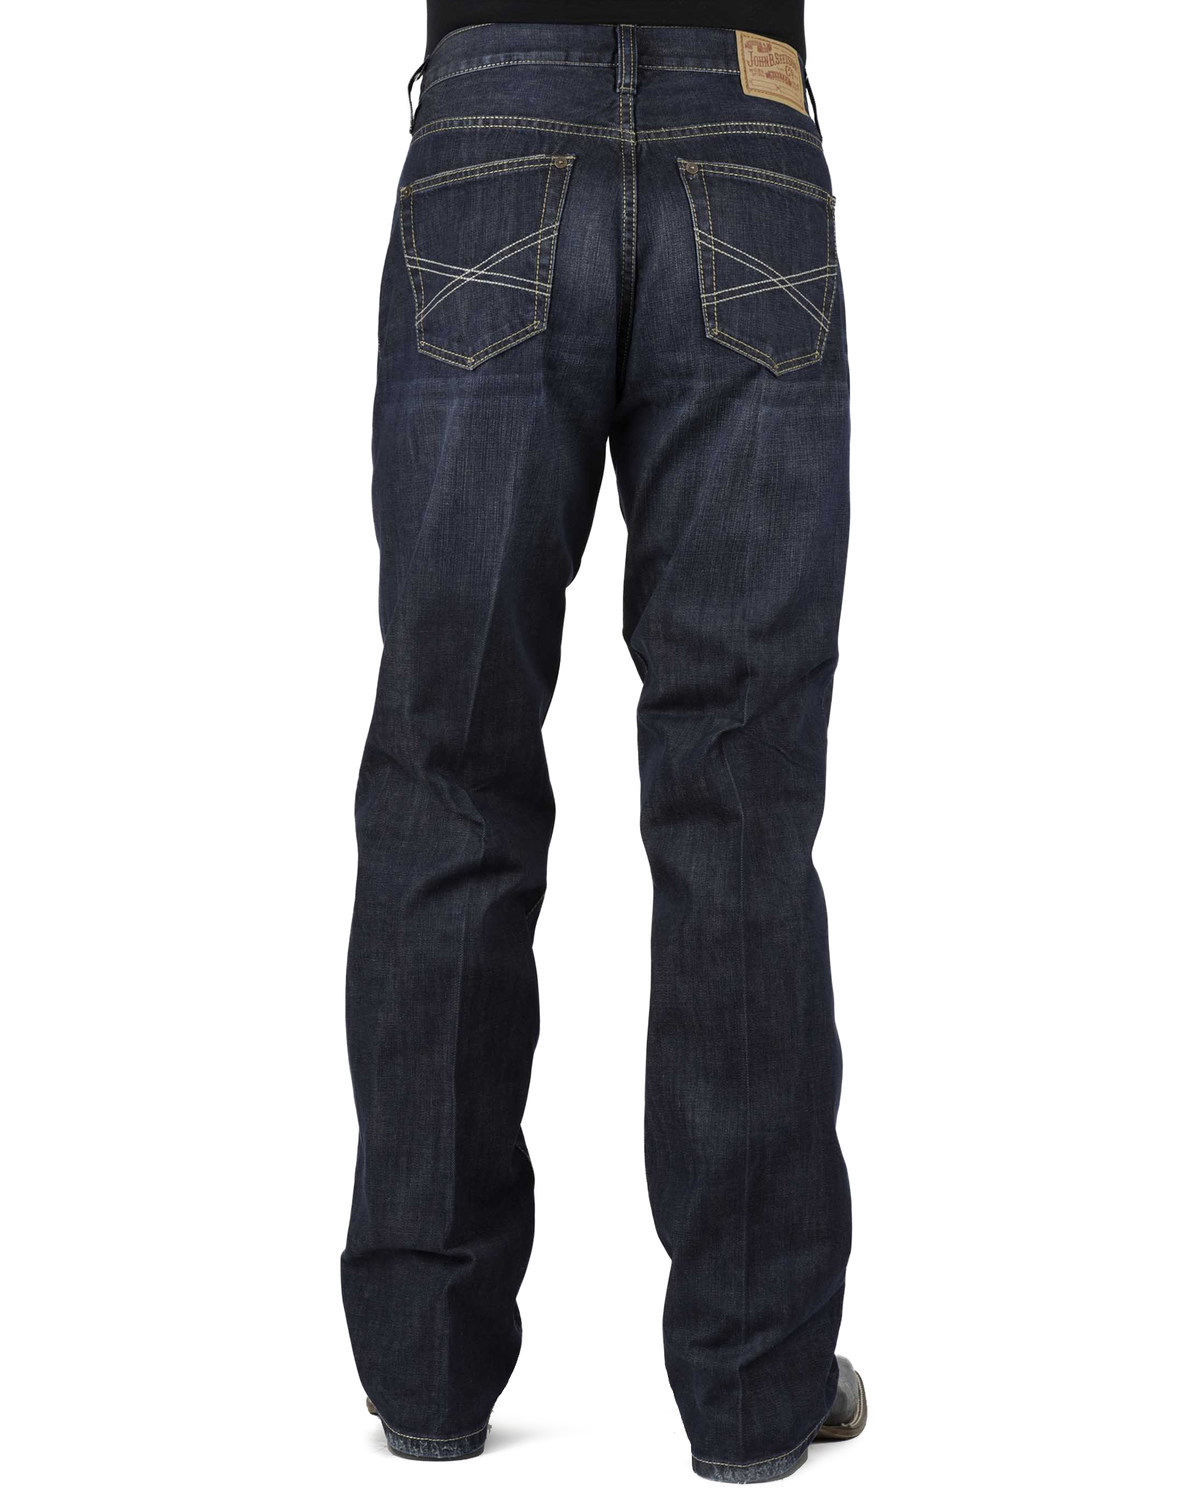 Stetson Men's Premium Modern Fit Boot Cut Jeans